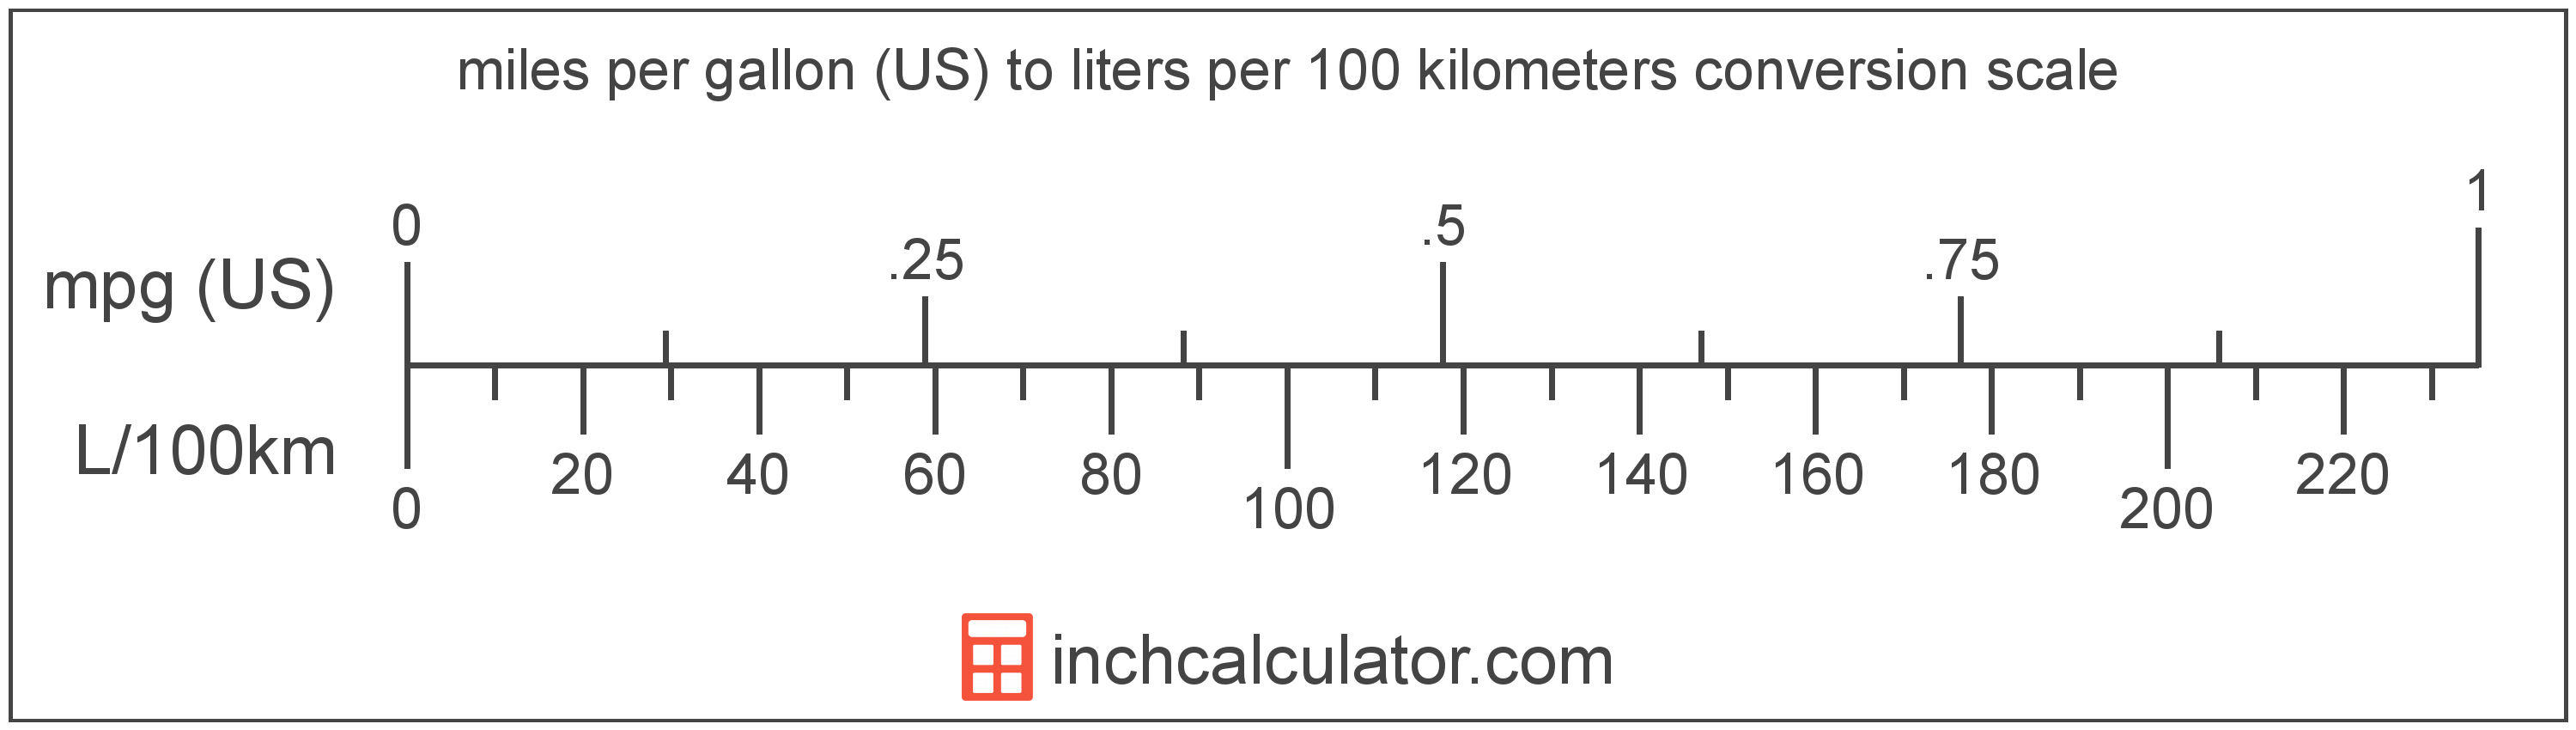 conversion scale showing miles per gallon (US) and equivalent liters per 100 kilometers fuel economy values